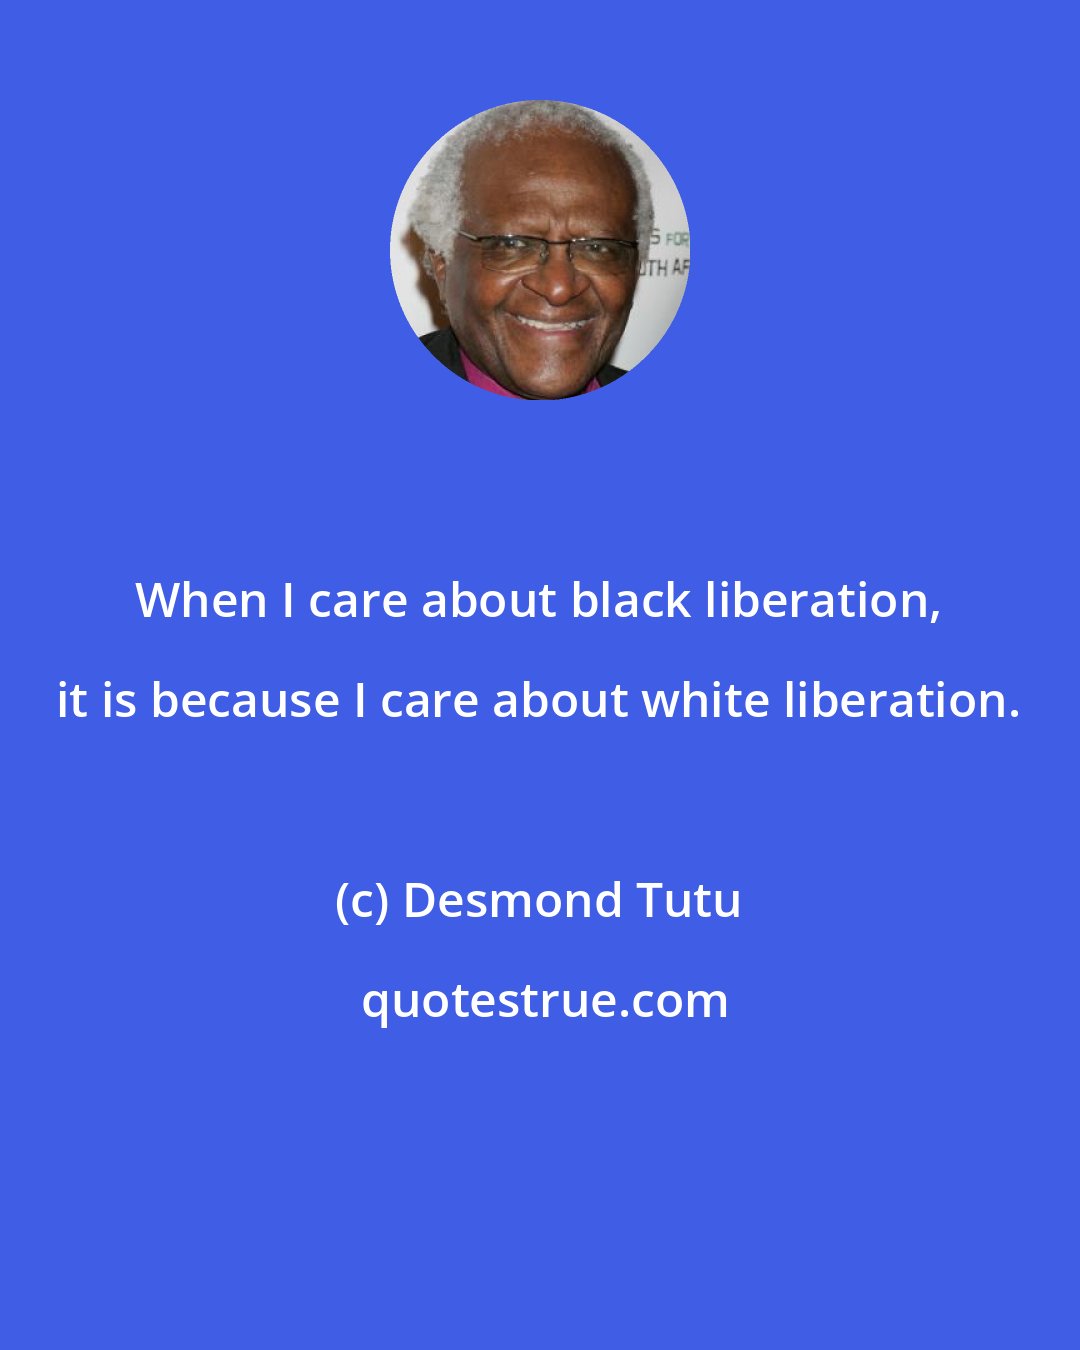 Desmond Tutu: When I care about black liberation, it is because I care about white liberation.